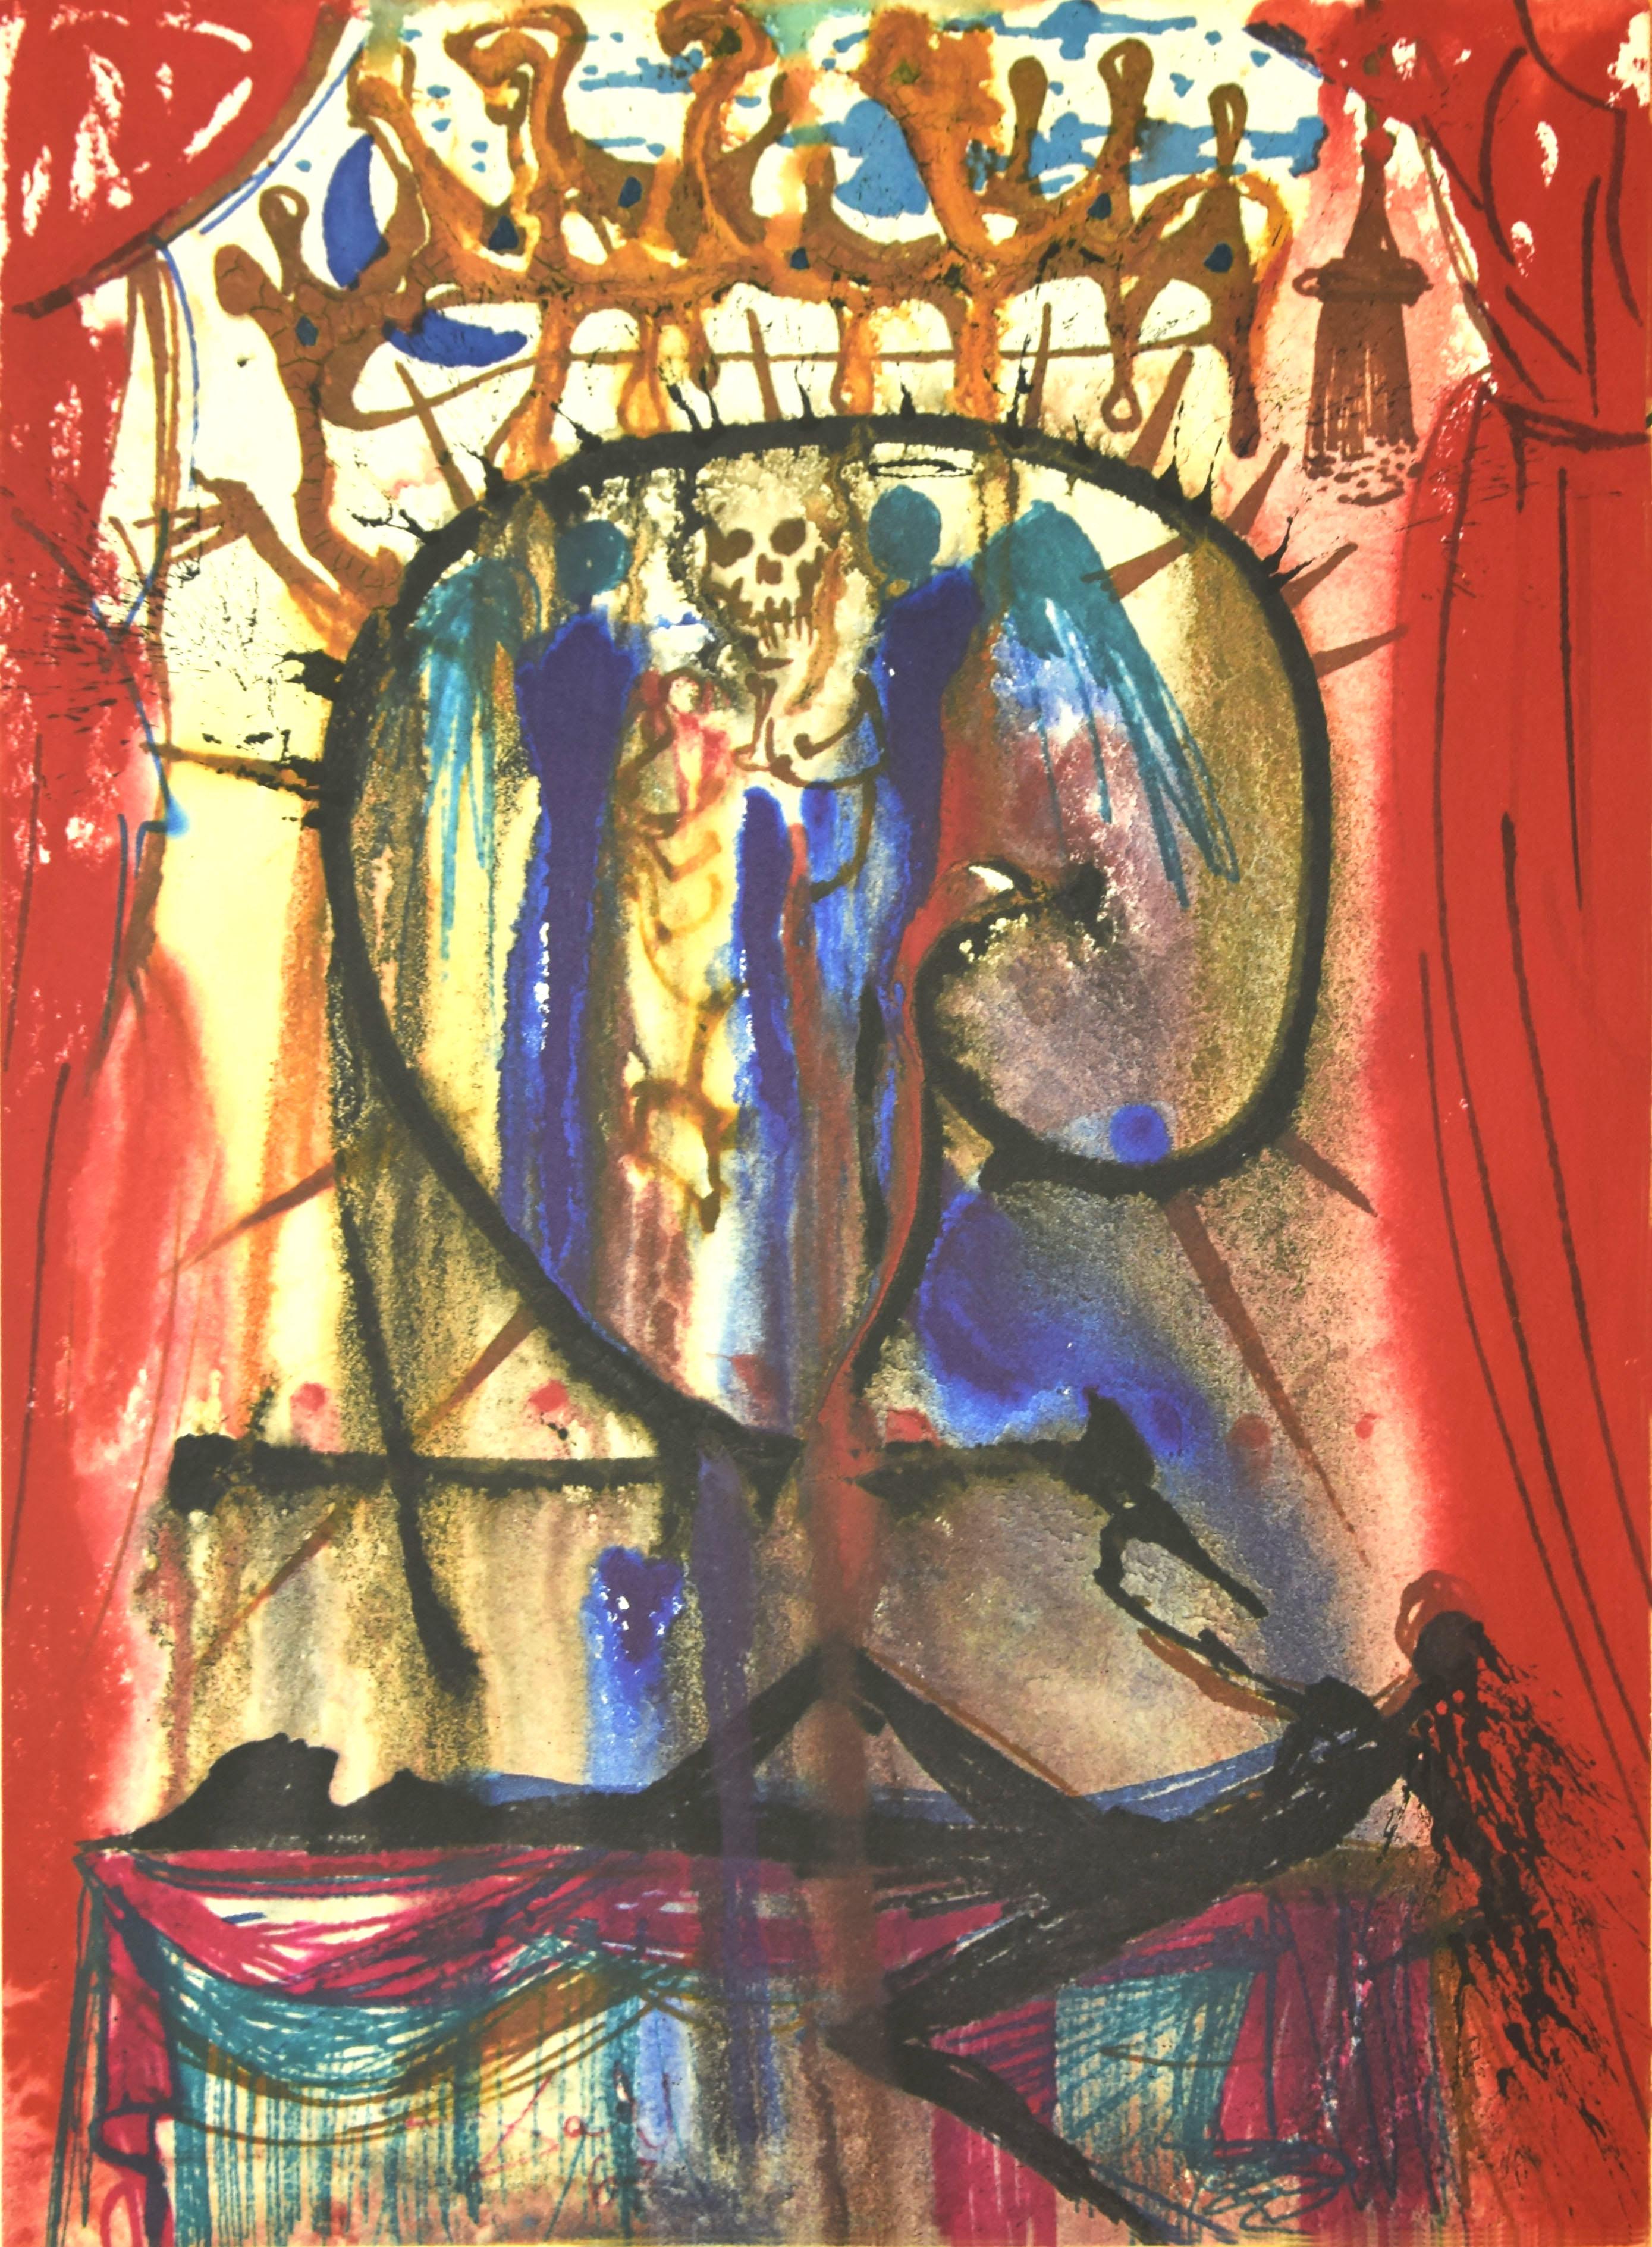 Salvador Dalí Print - Romeo and Juliet Act 5, Scene 3 - Original Lithograph by Salvador Dalì - 1975